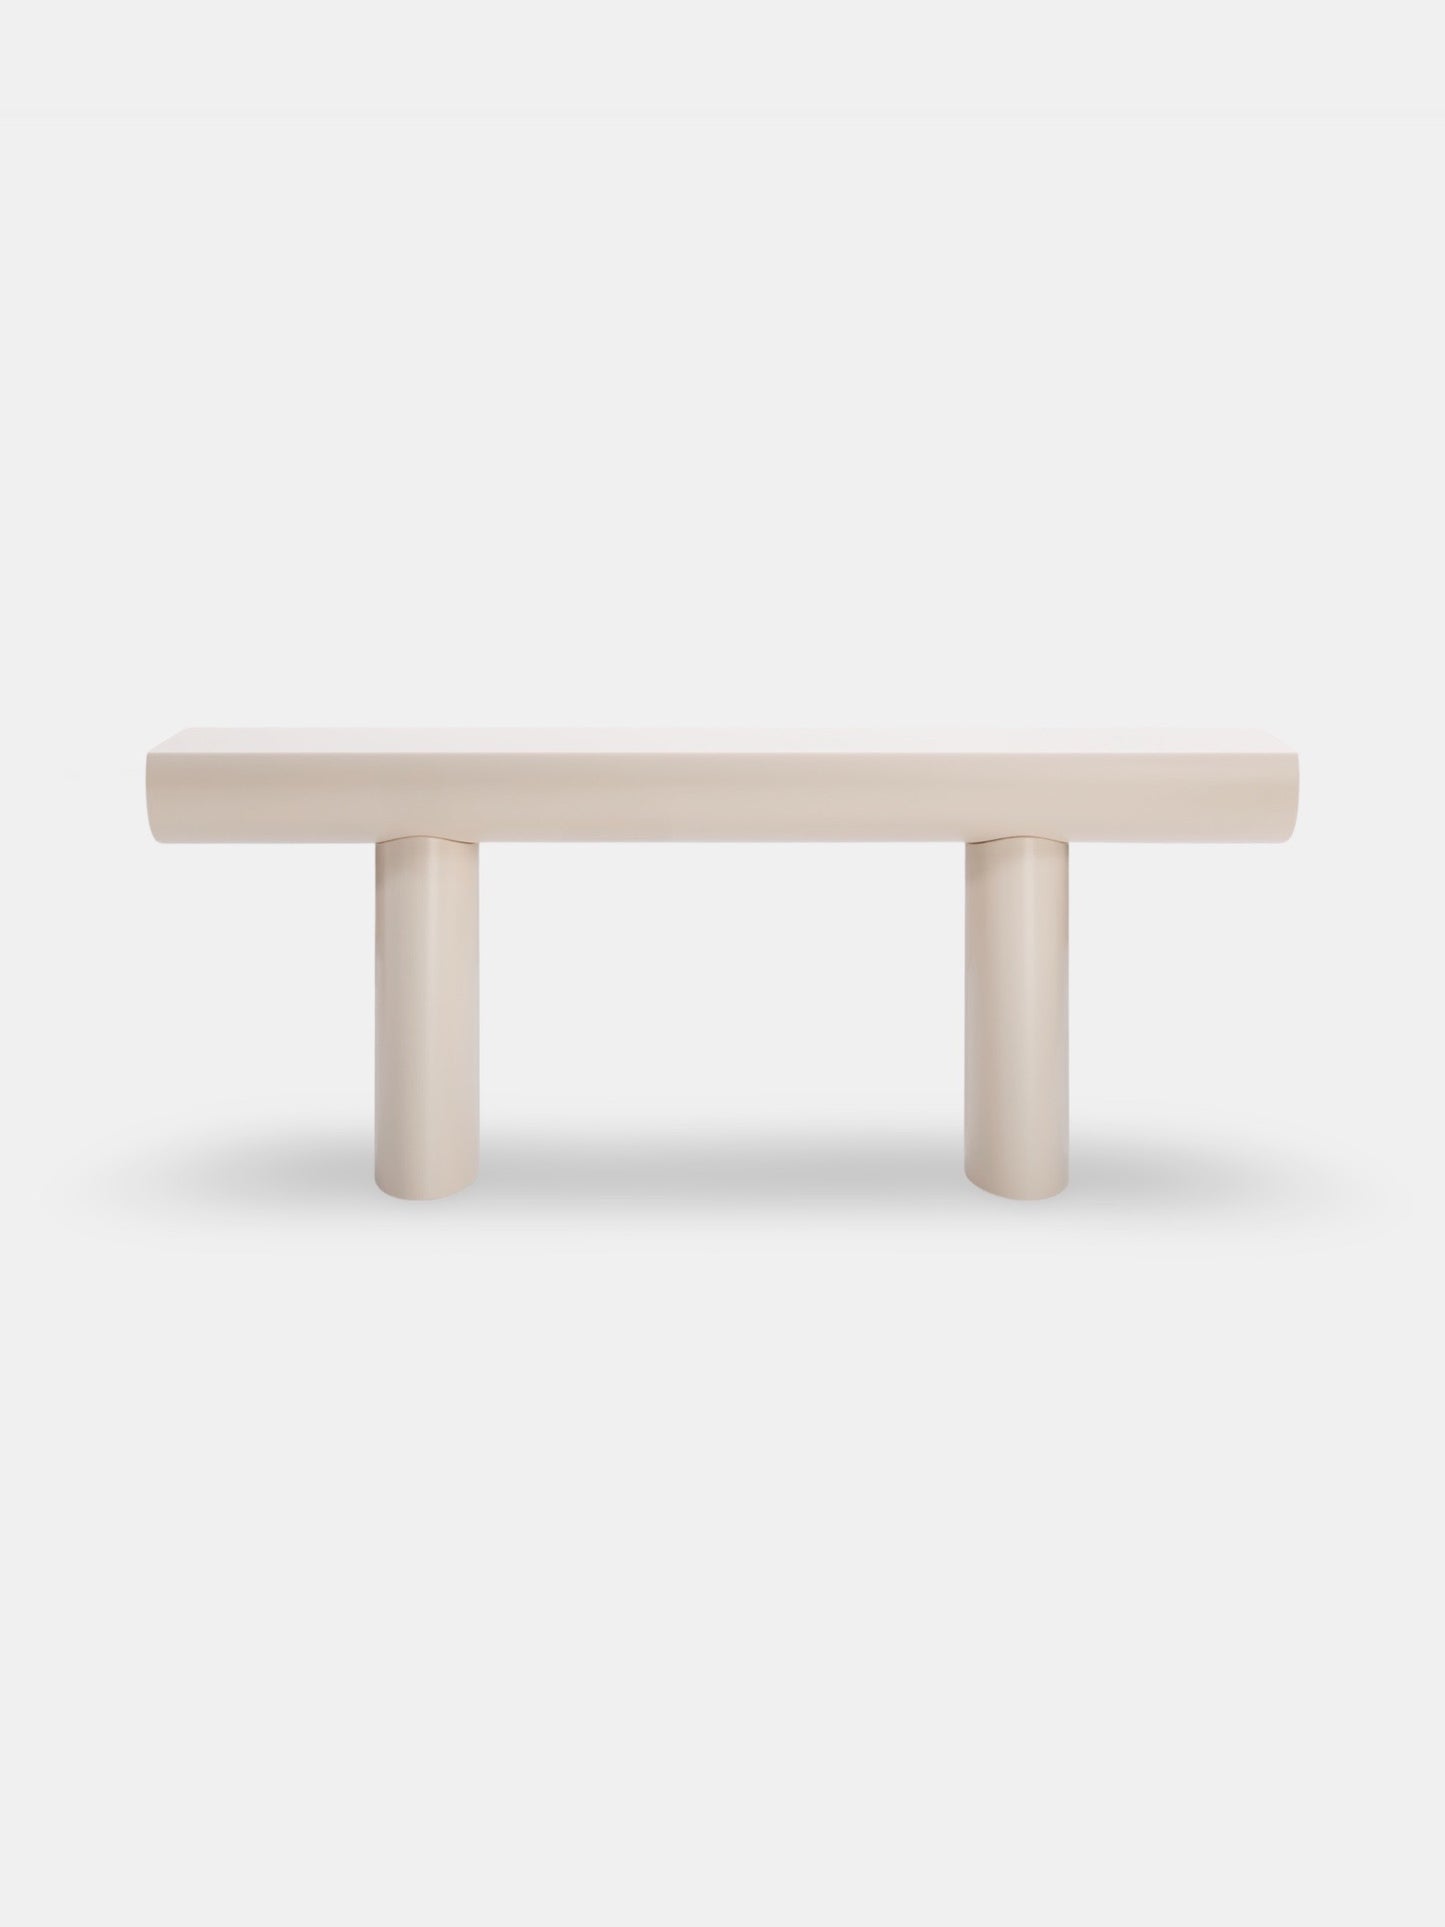 Console table designed by Aldo Bakker, 2017